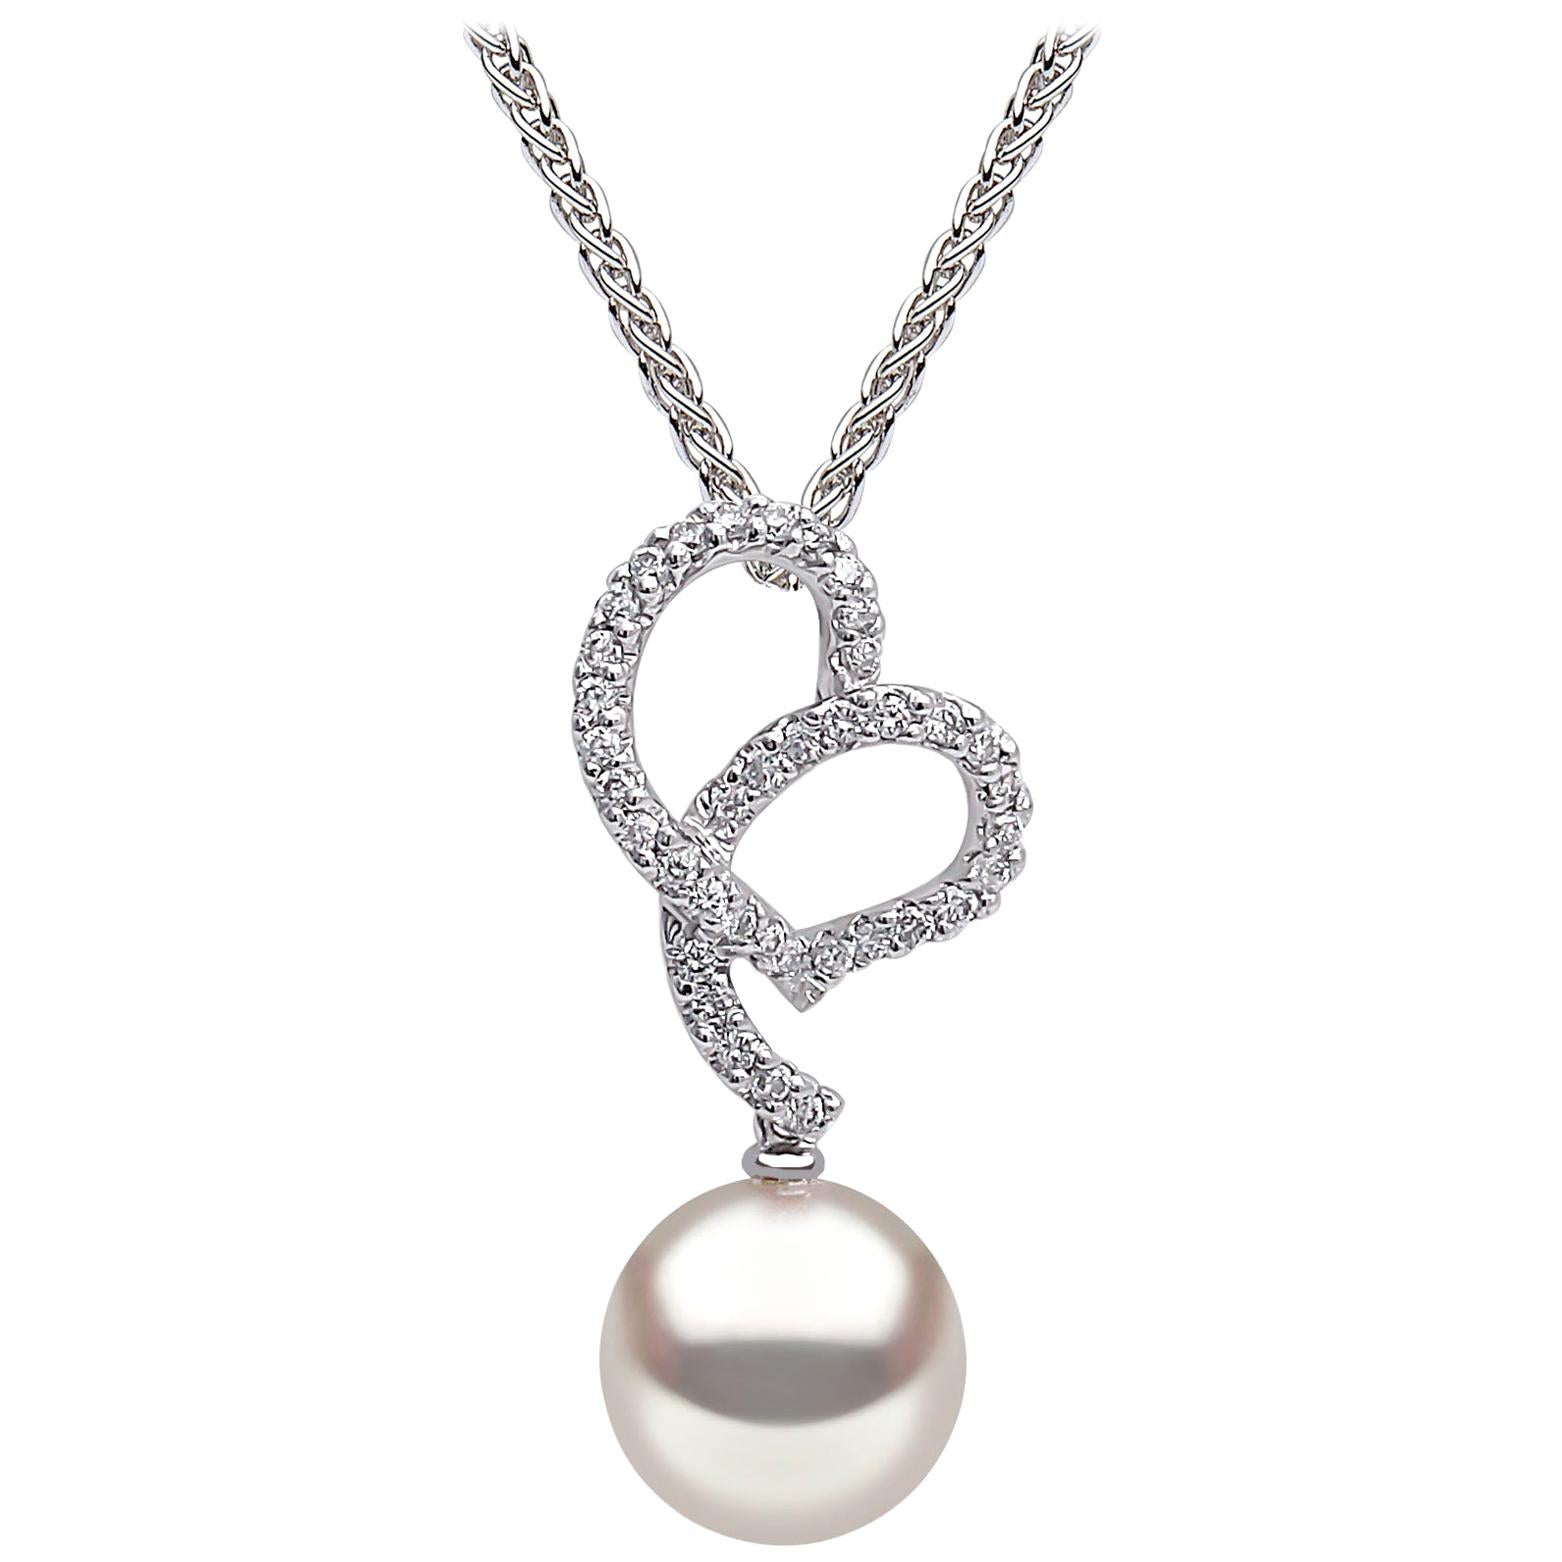 Yoko London Freshwater Pearl and Diamond Pendant in 18 Karat White Gold